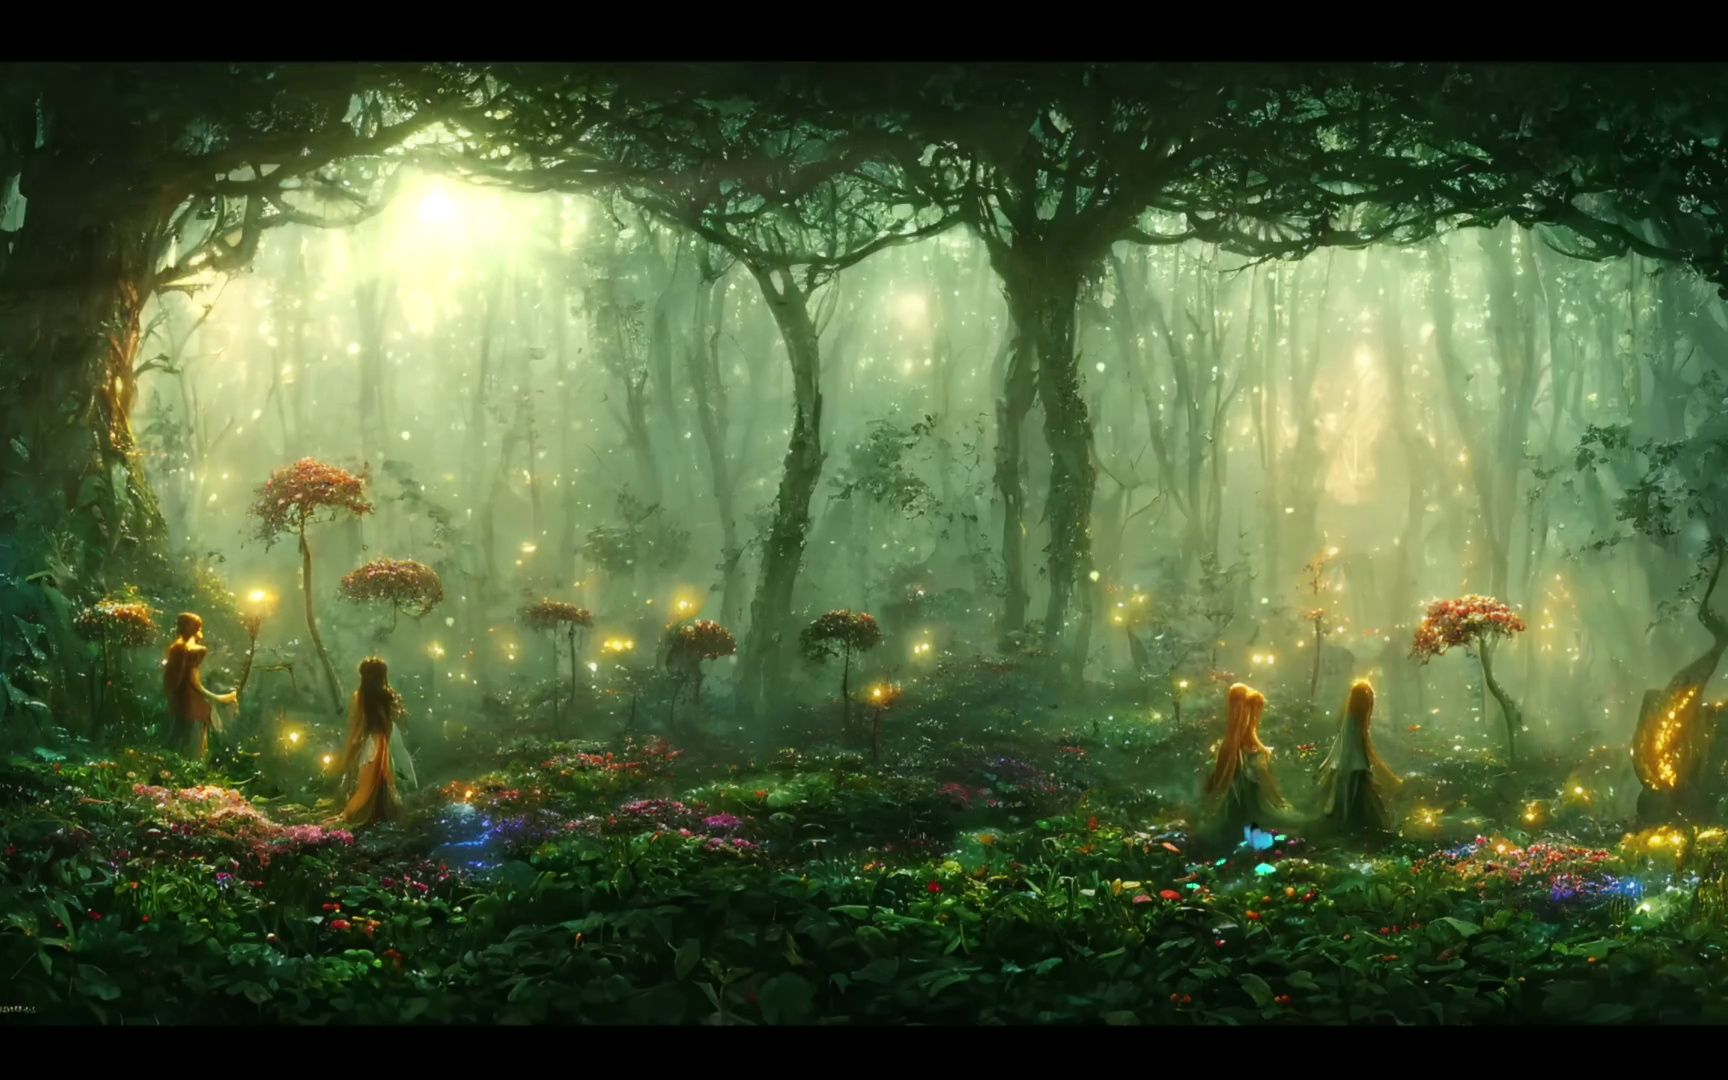 [4K UHD] 精灵之地。魔法森林里梦幻般的音乐。梦幻般的氛围 冥想，平安，健康，集中